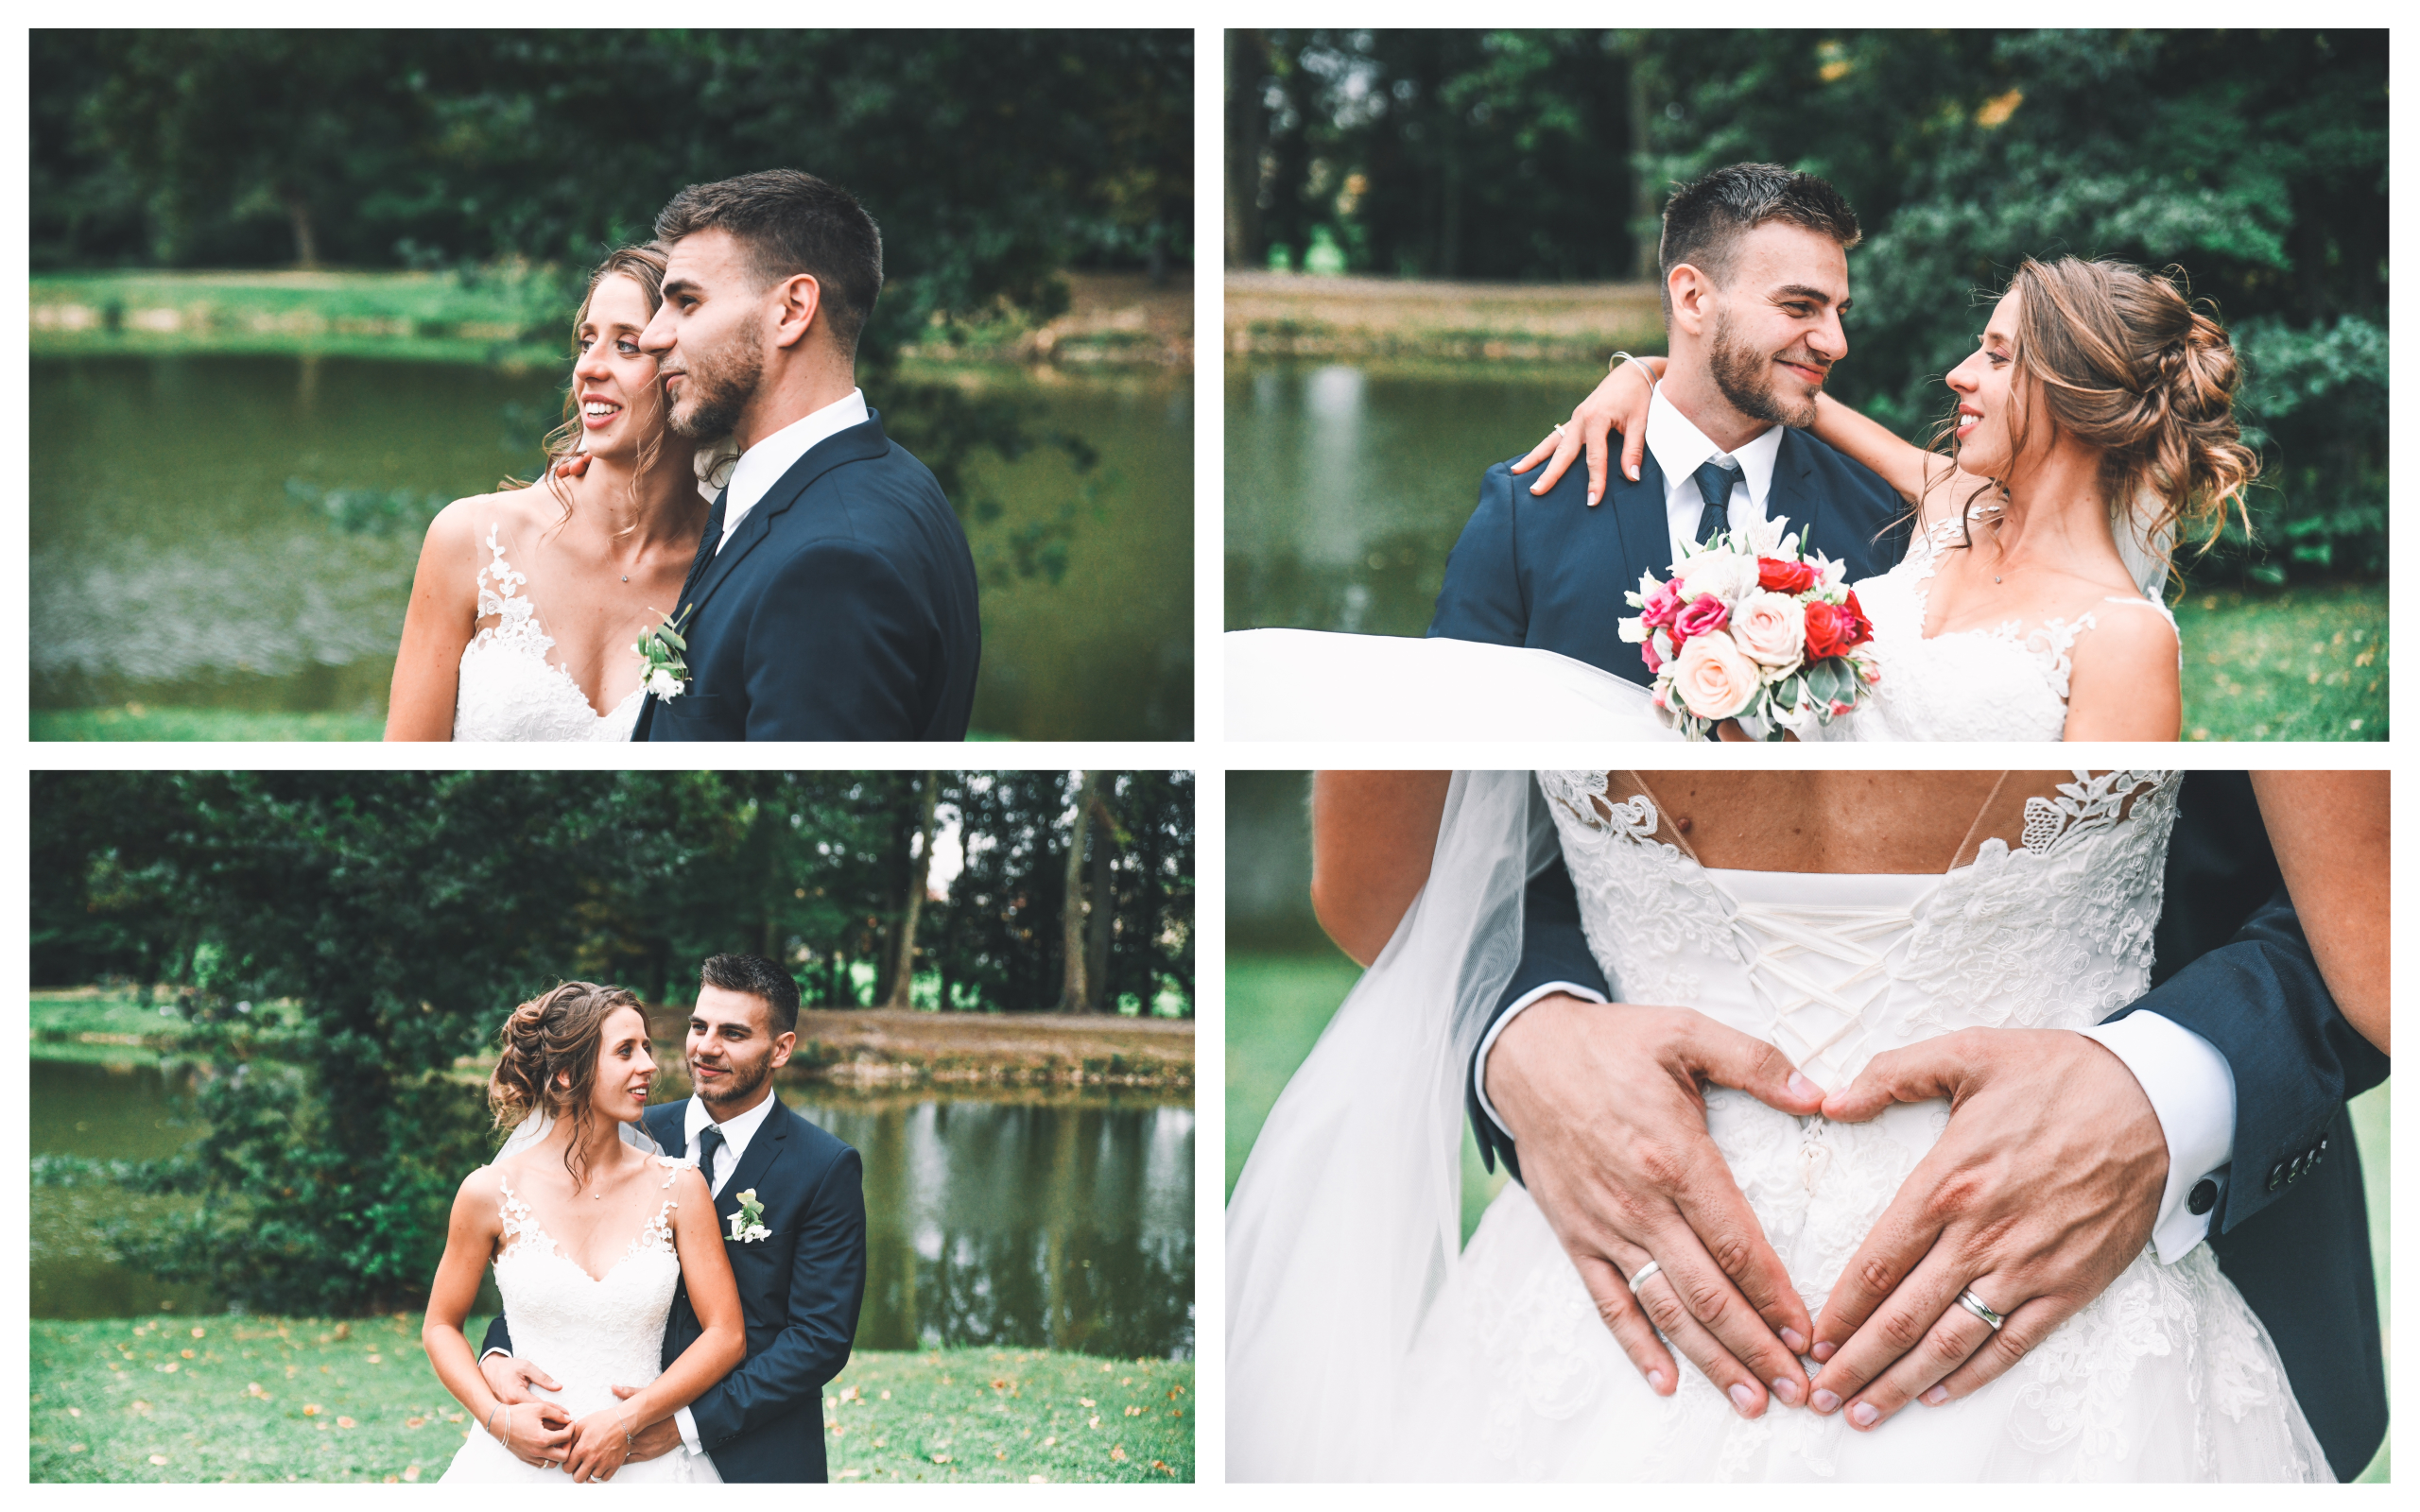 photographe mariage montpellier